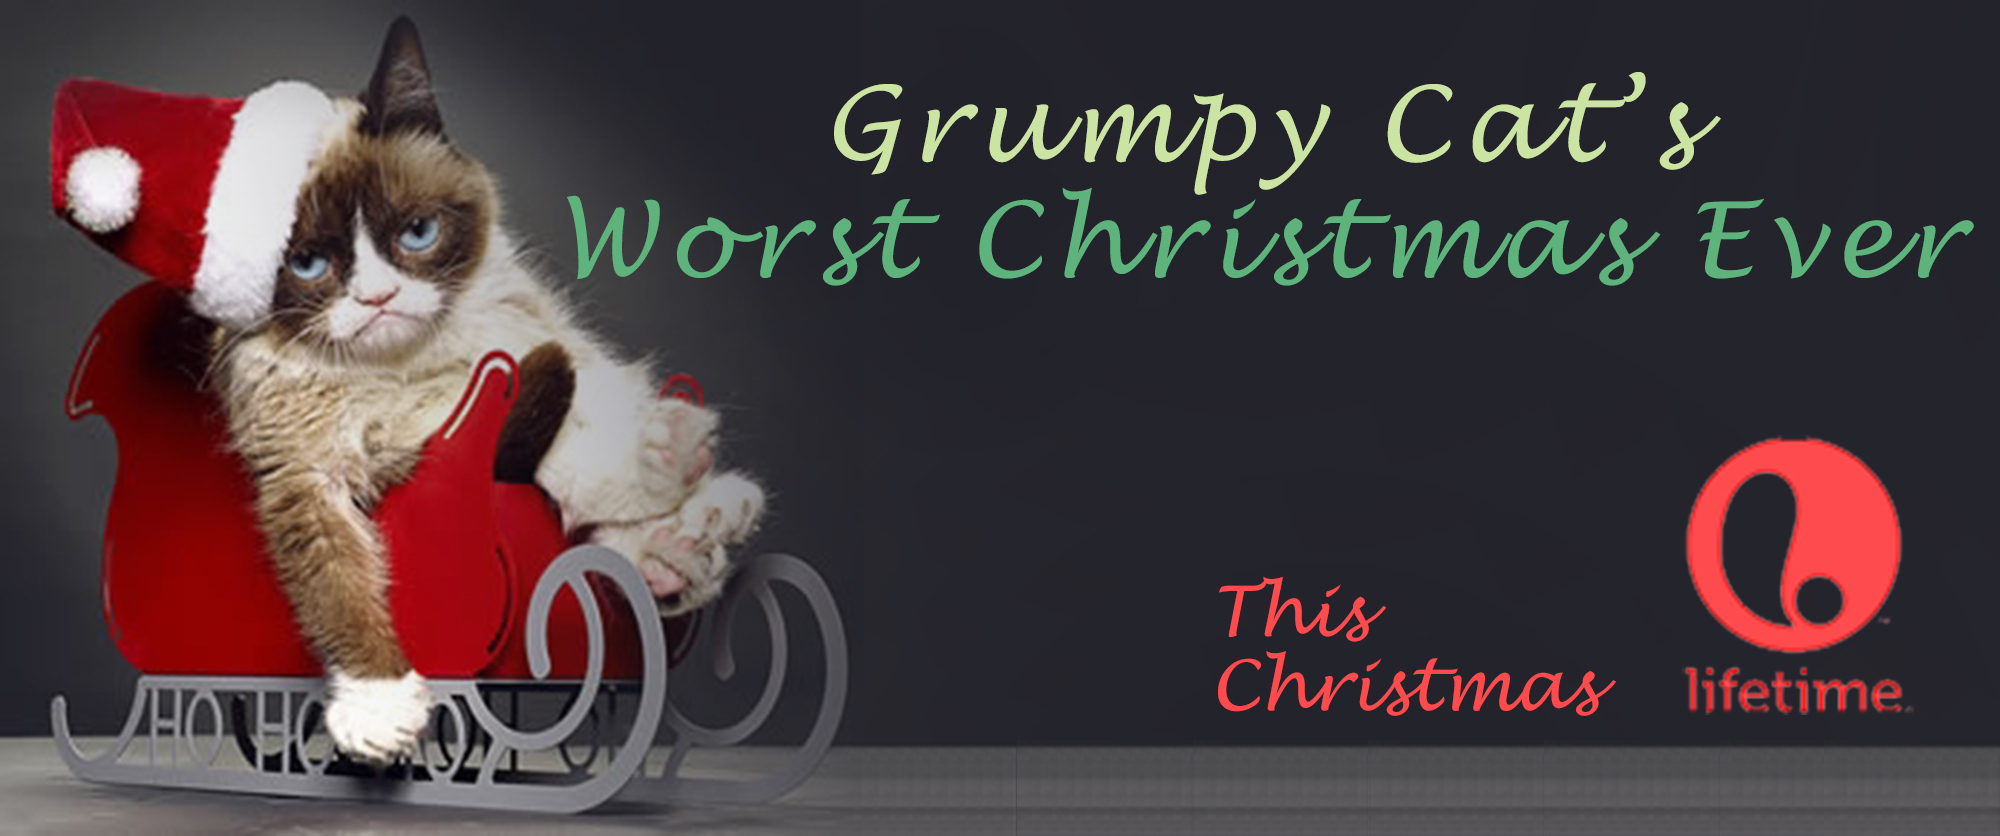 Grumpy Cat's Worst Christmas Ever #20